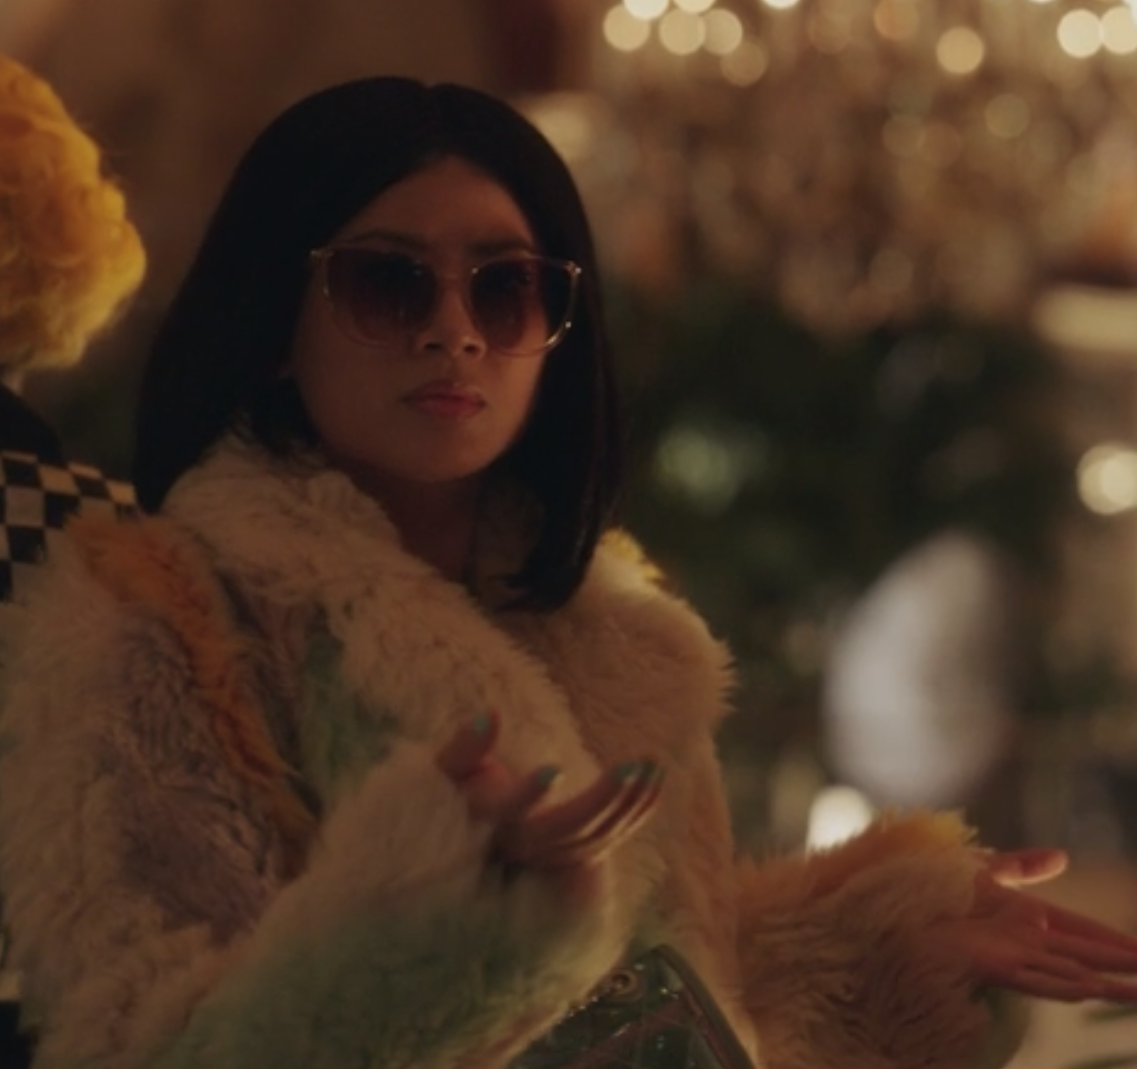 Nelly Yuki wears a colorful fuzzy jacket with dark sunglasses